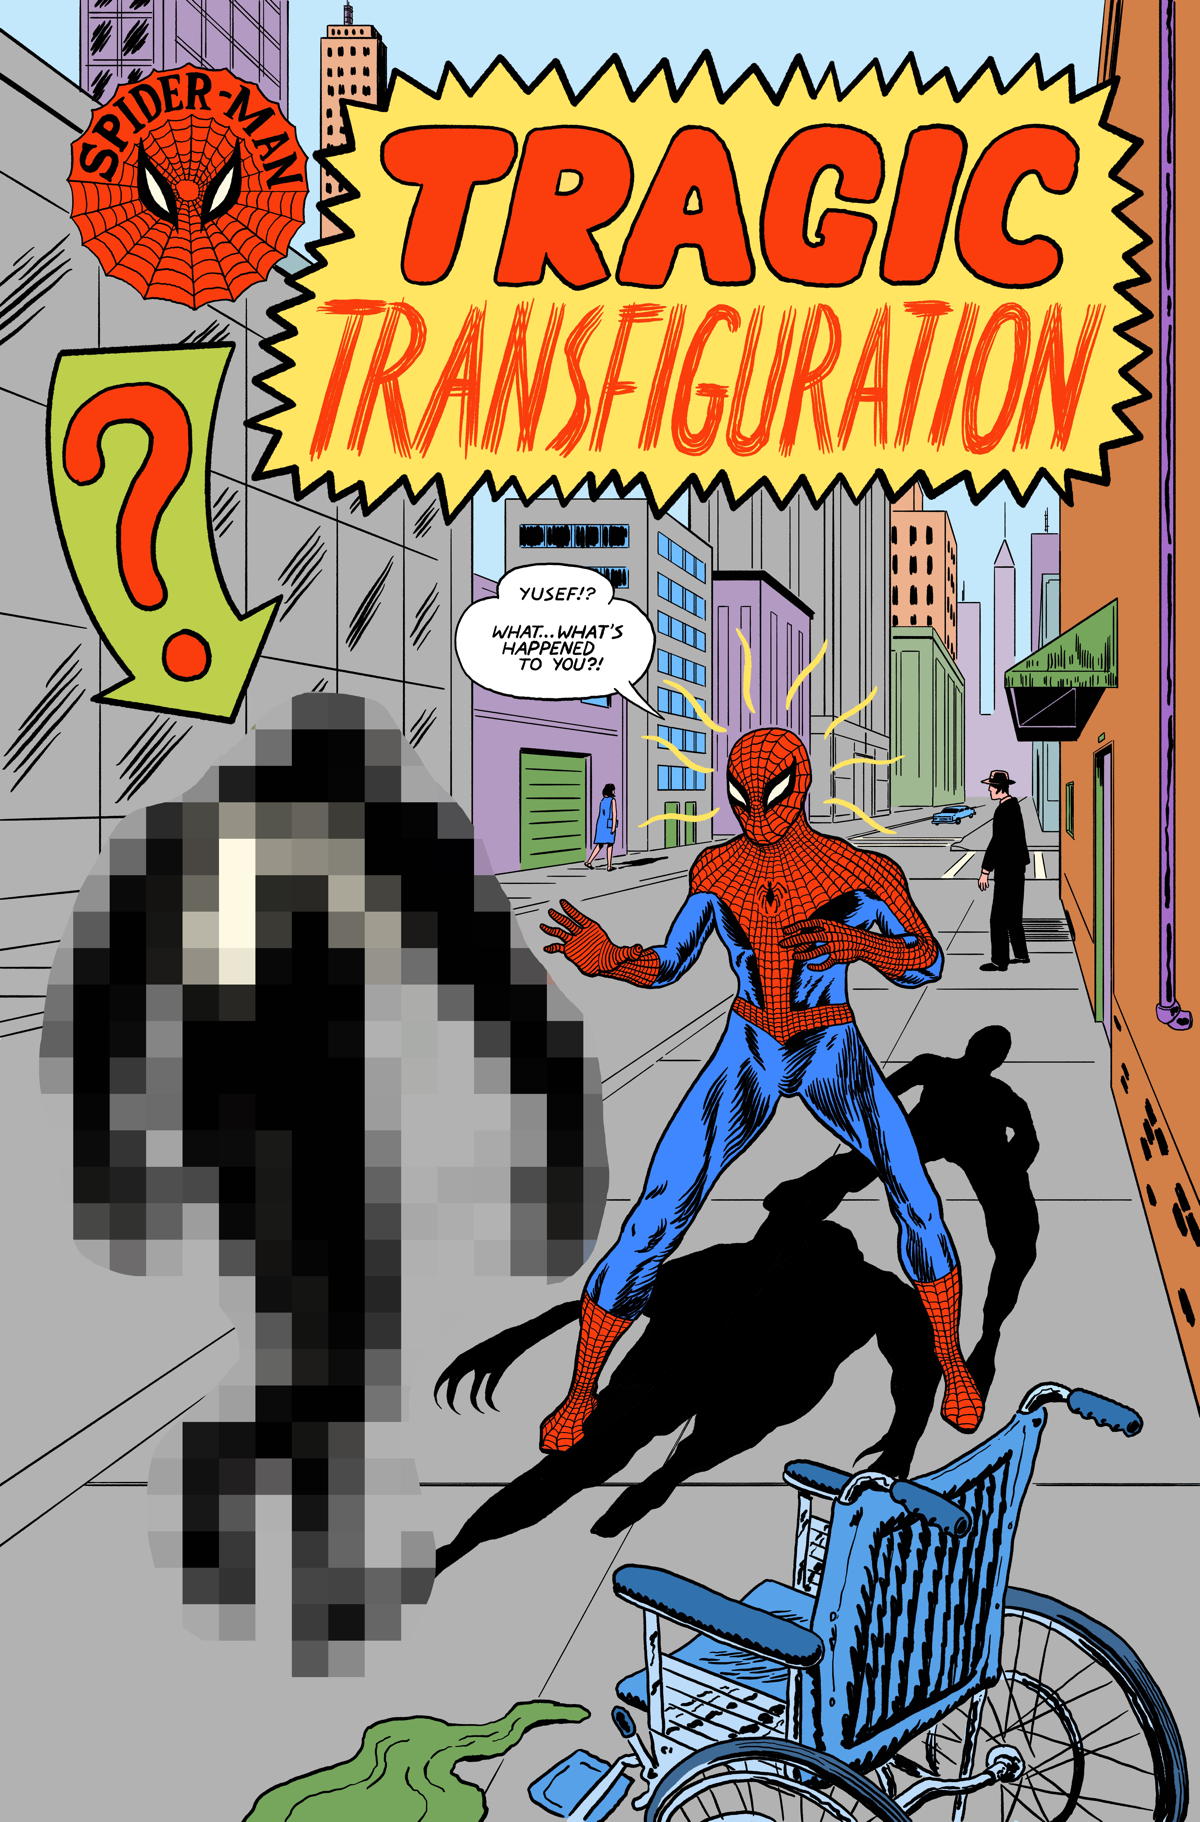 Tragic_Transfiguration_blurred.jpg